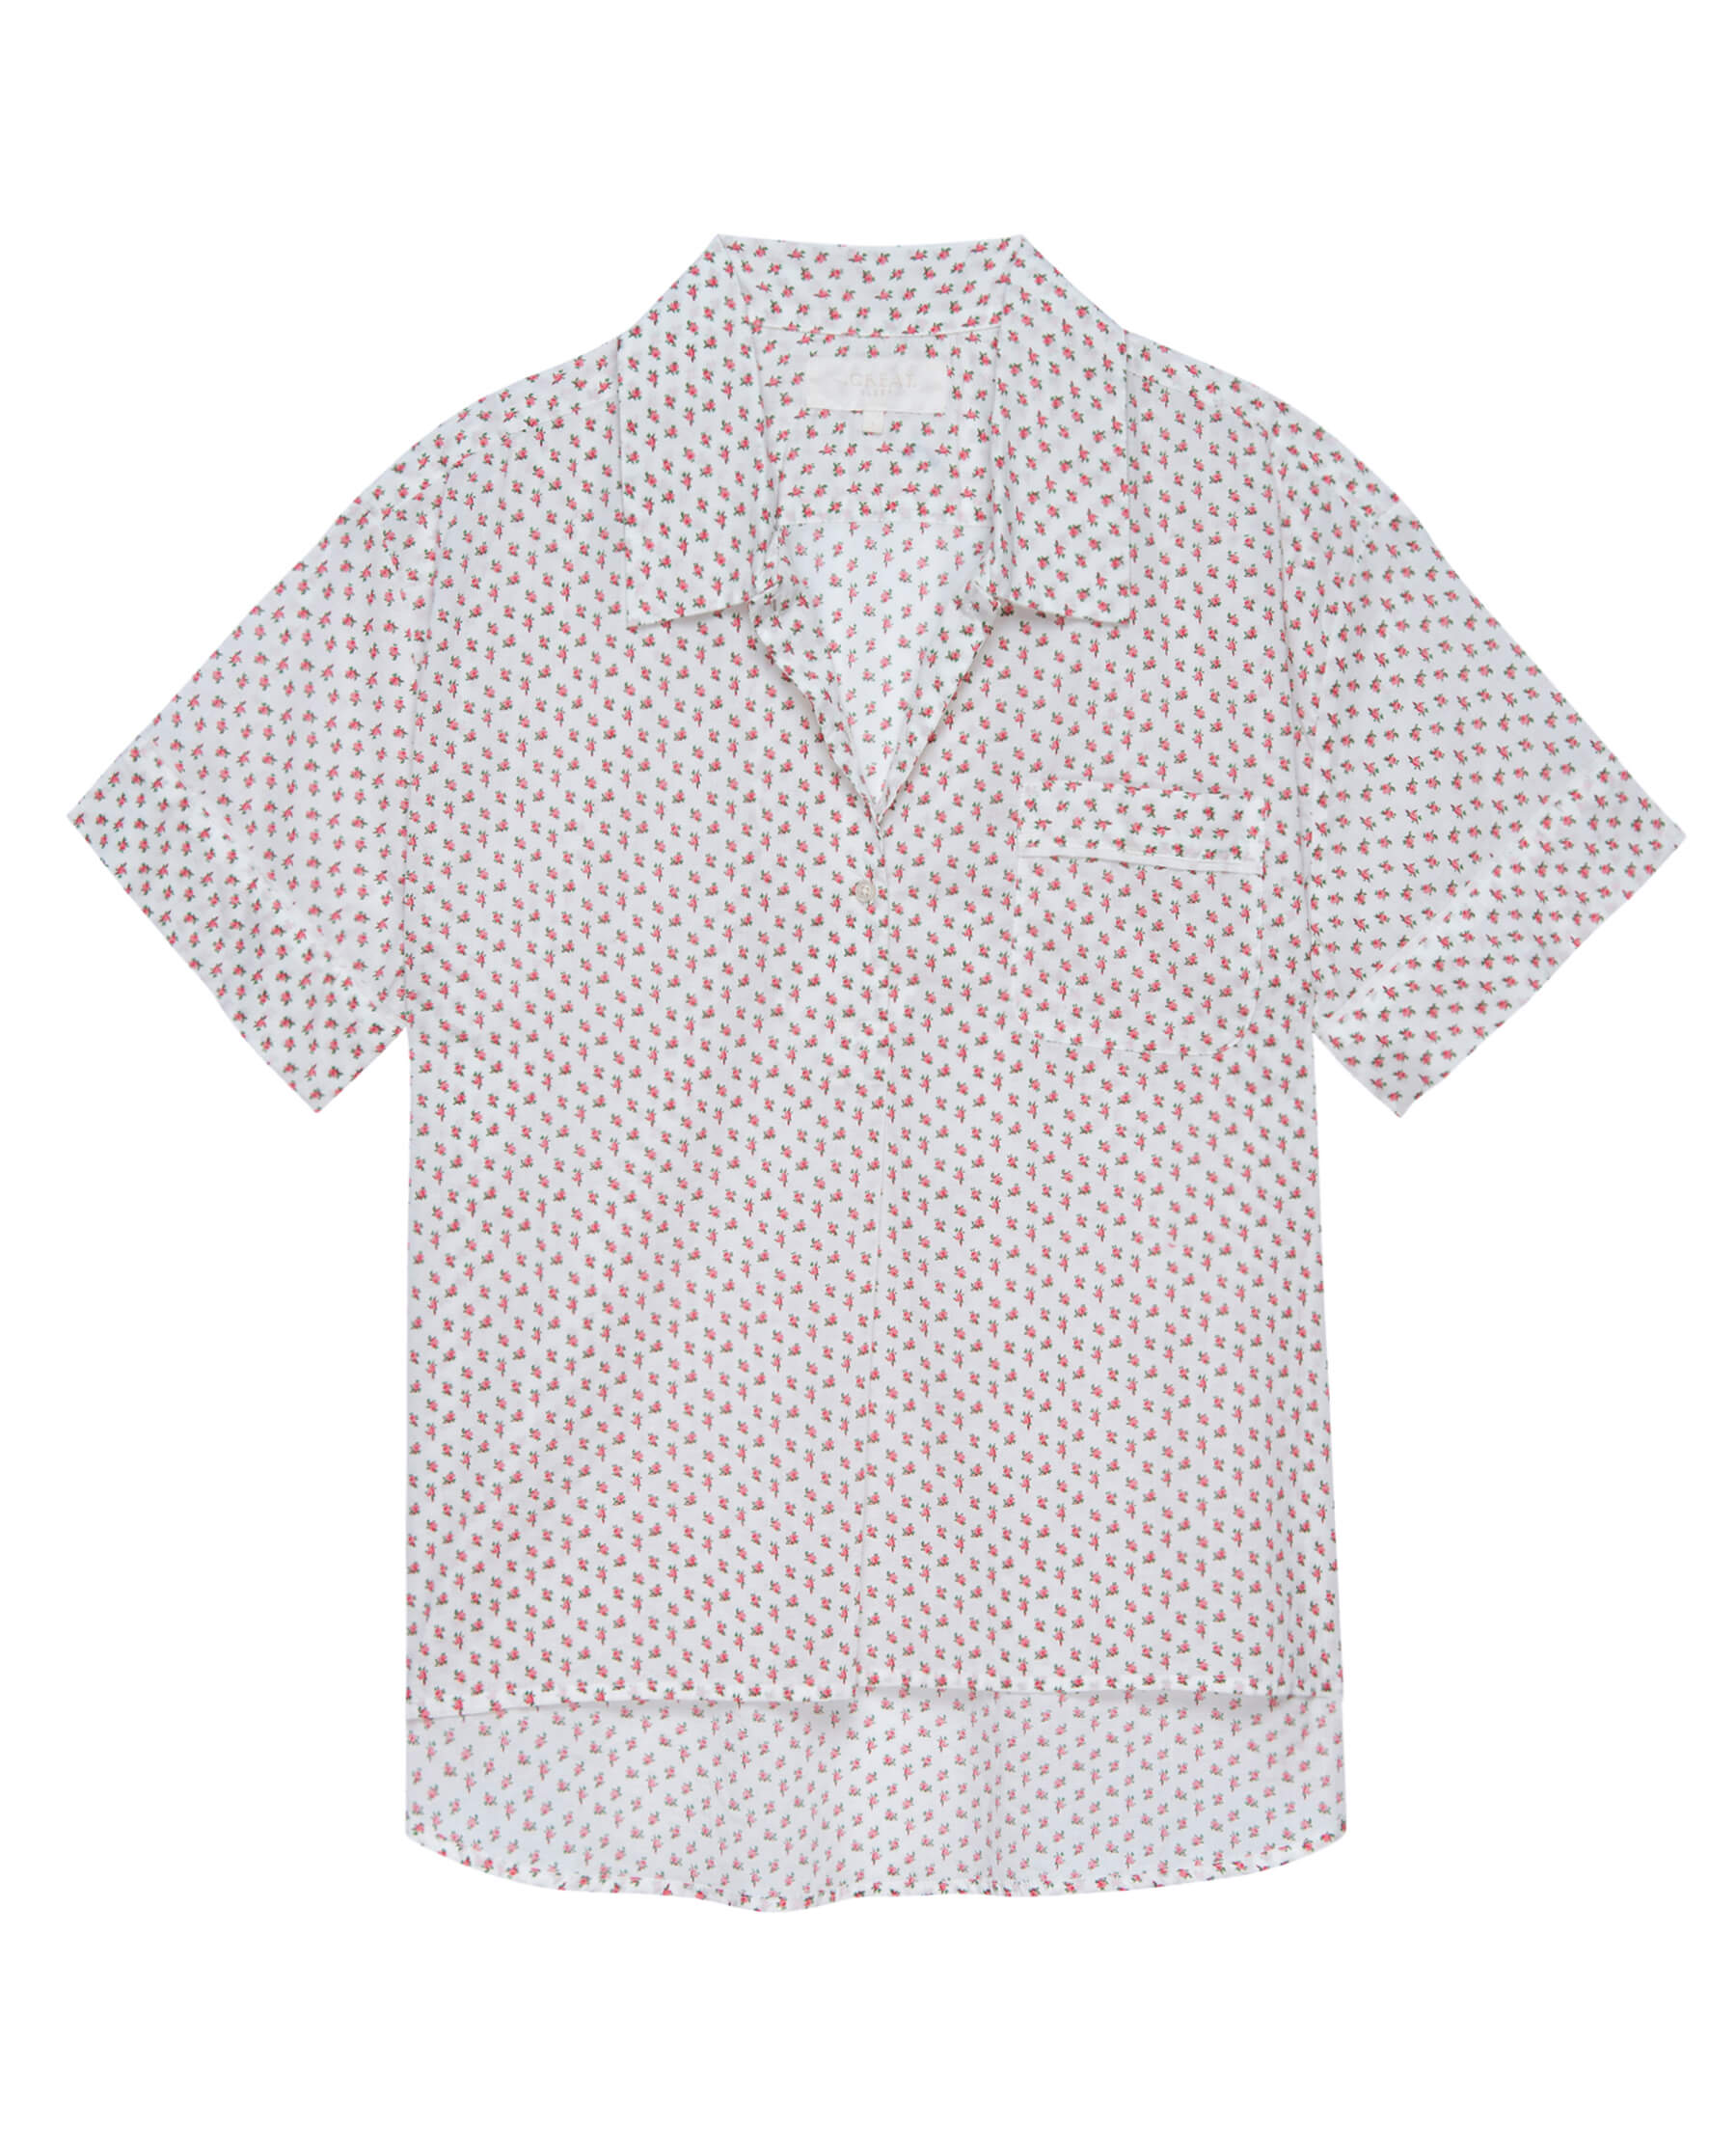 The Short Sleeve Pajama Shirt. -- Calico Rose Print SLEEP TOP THE GREAT. SP24 SLEEP